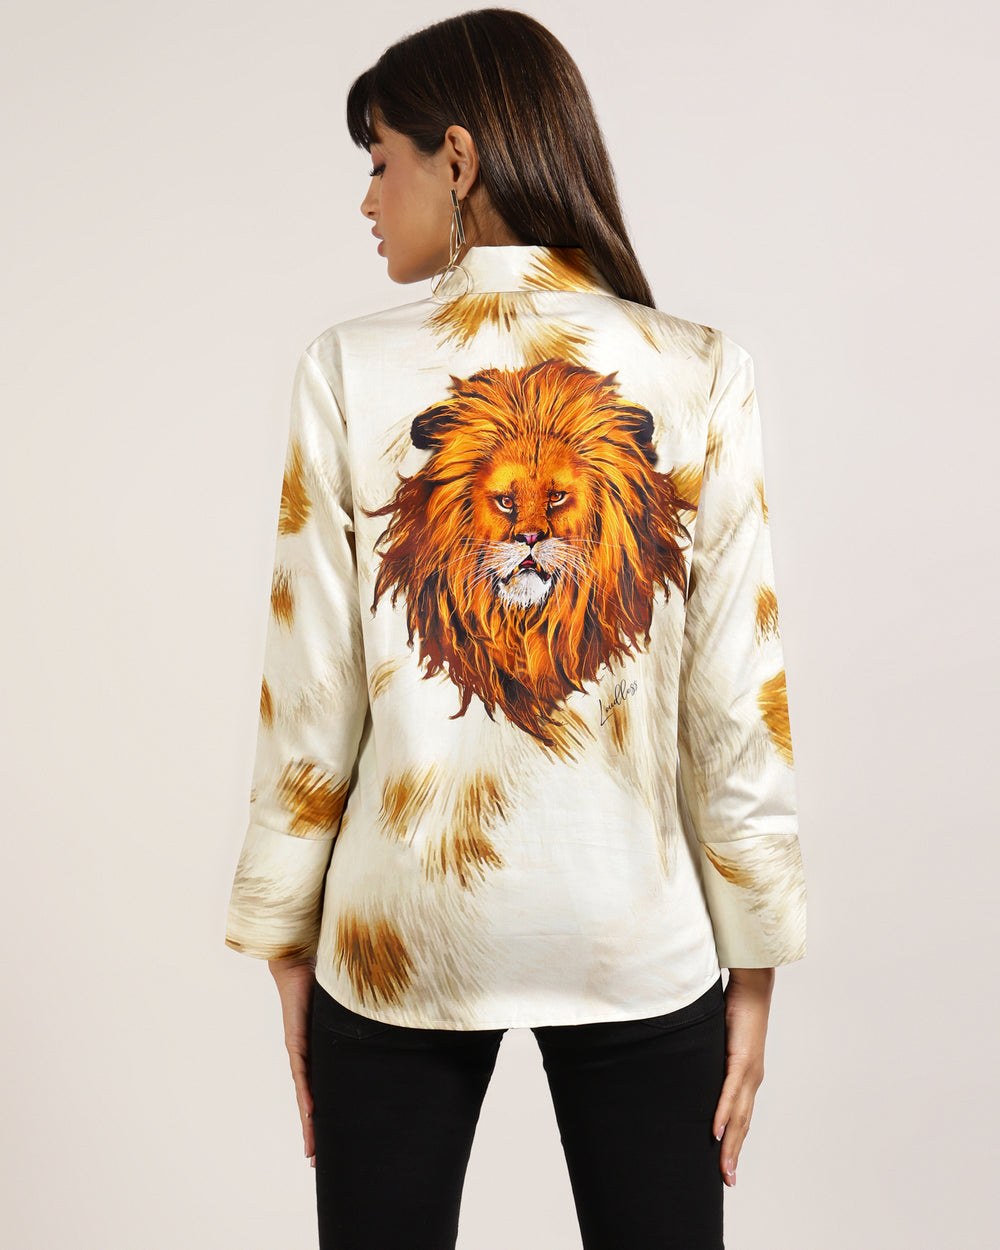 Lion Print Women shirt